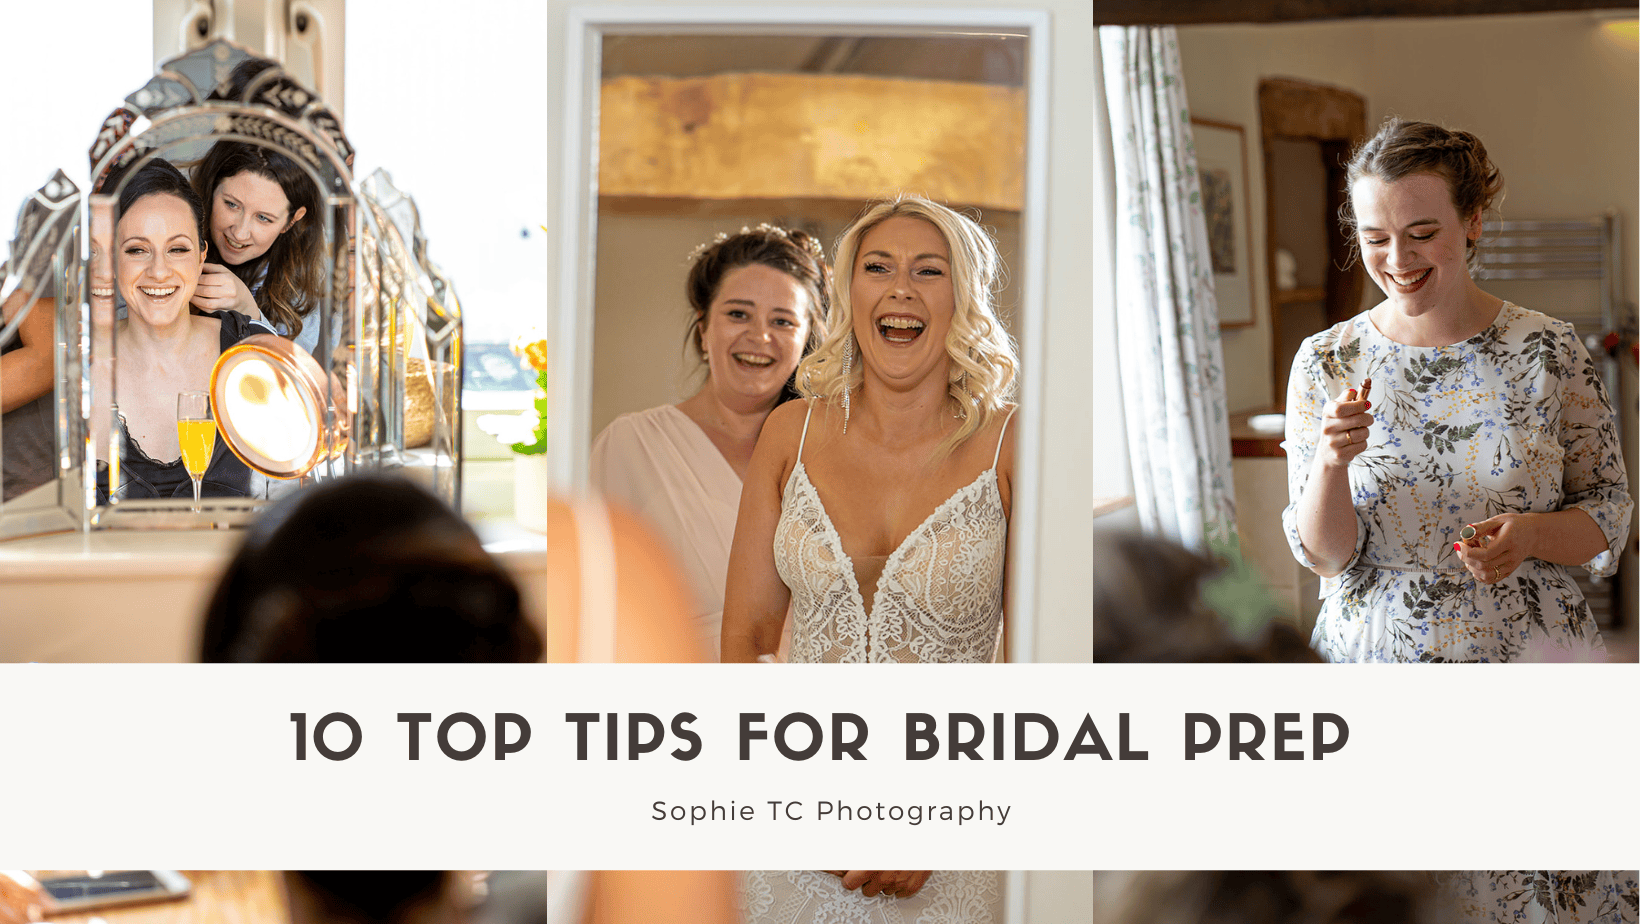 10 Top tips for bridal prep